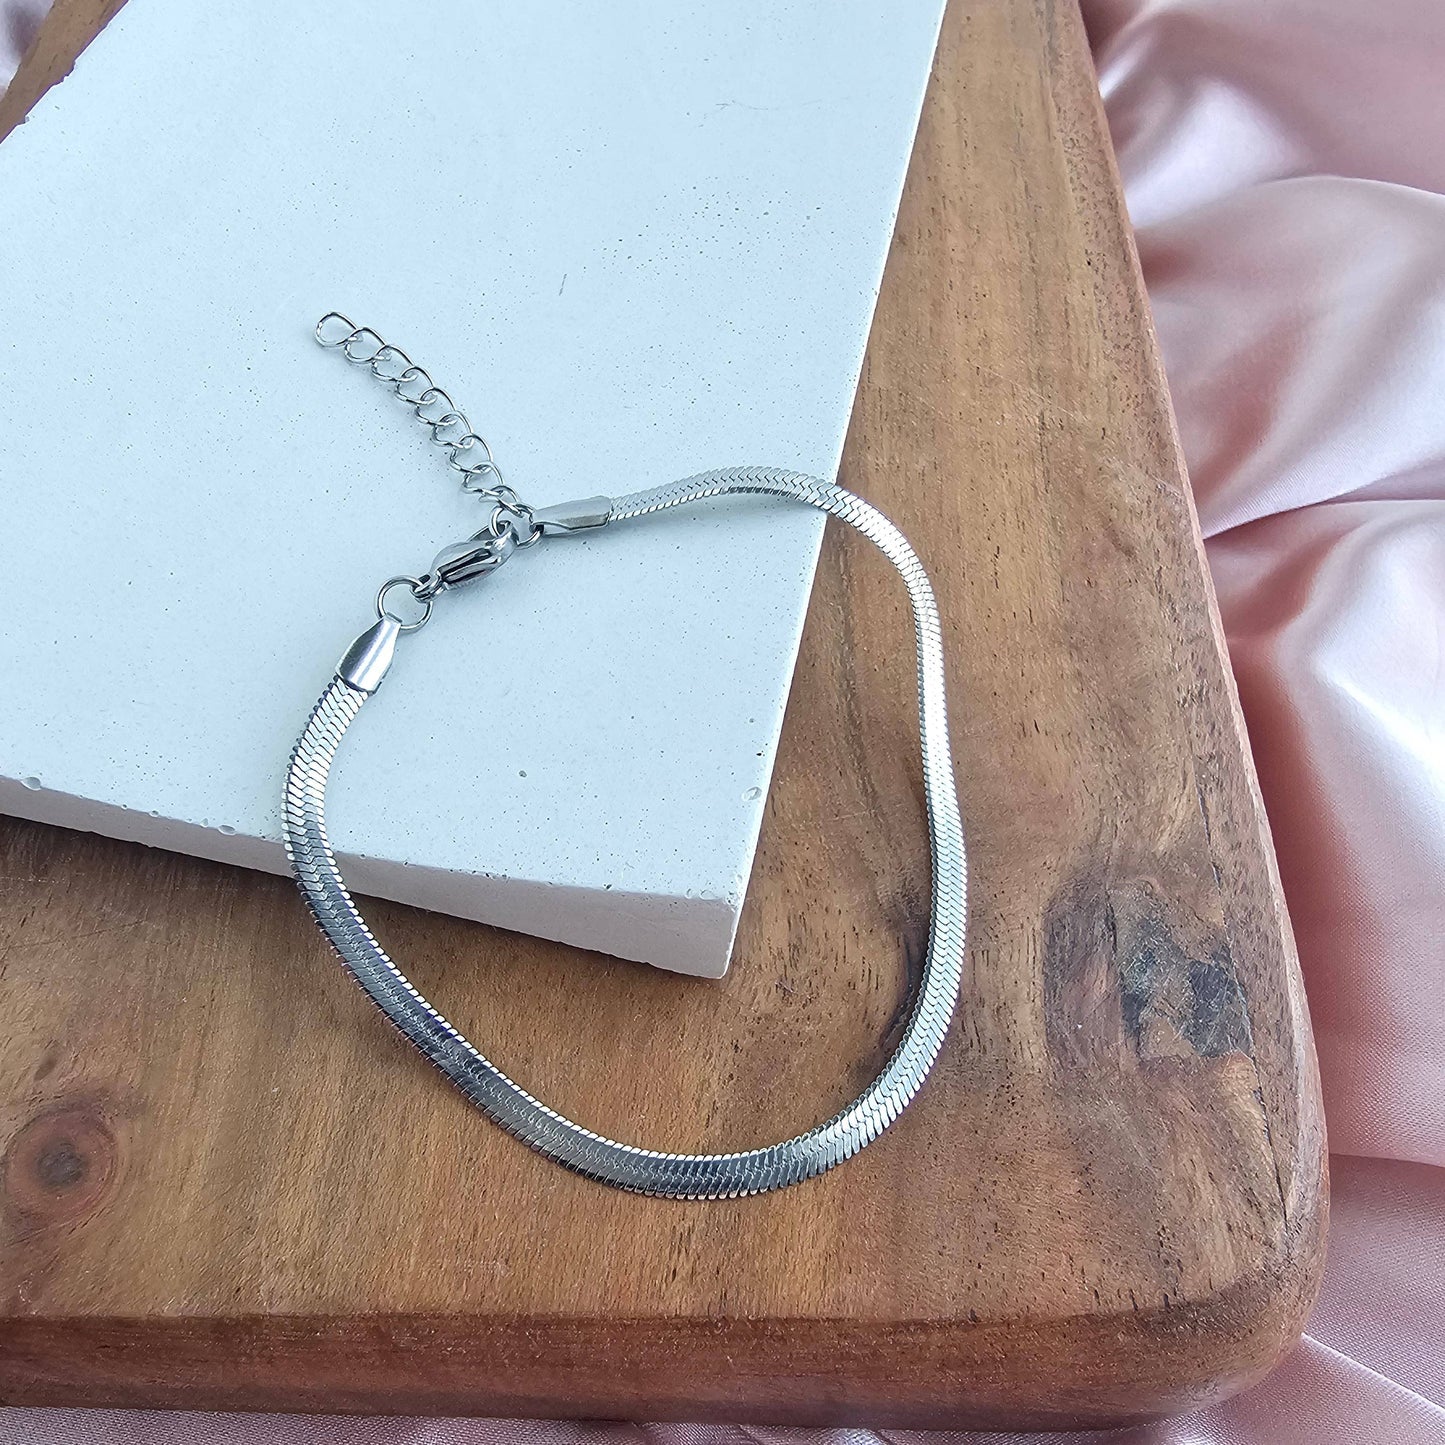 Silver Herringbone Bracelet